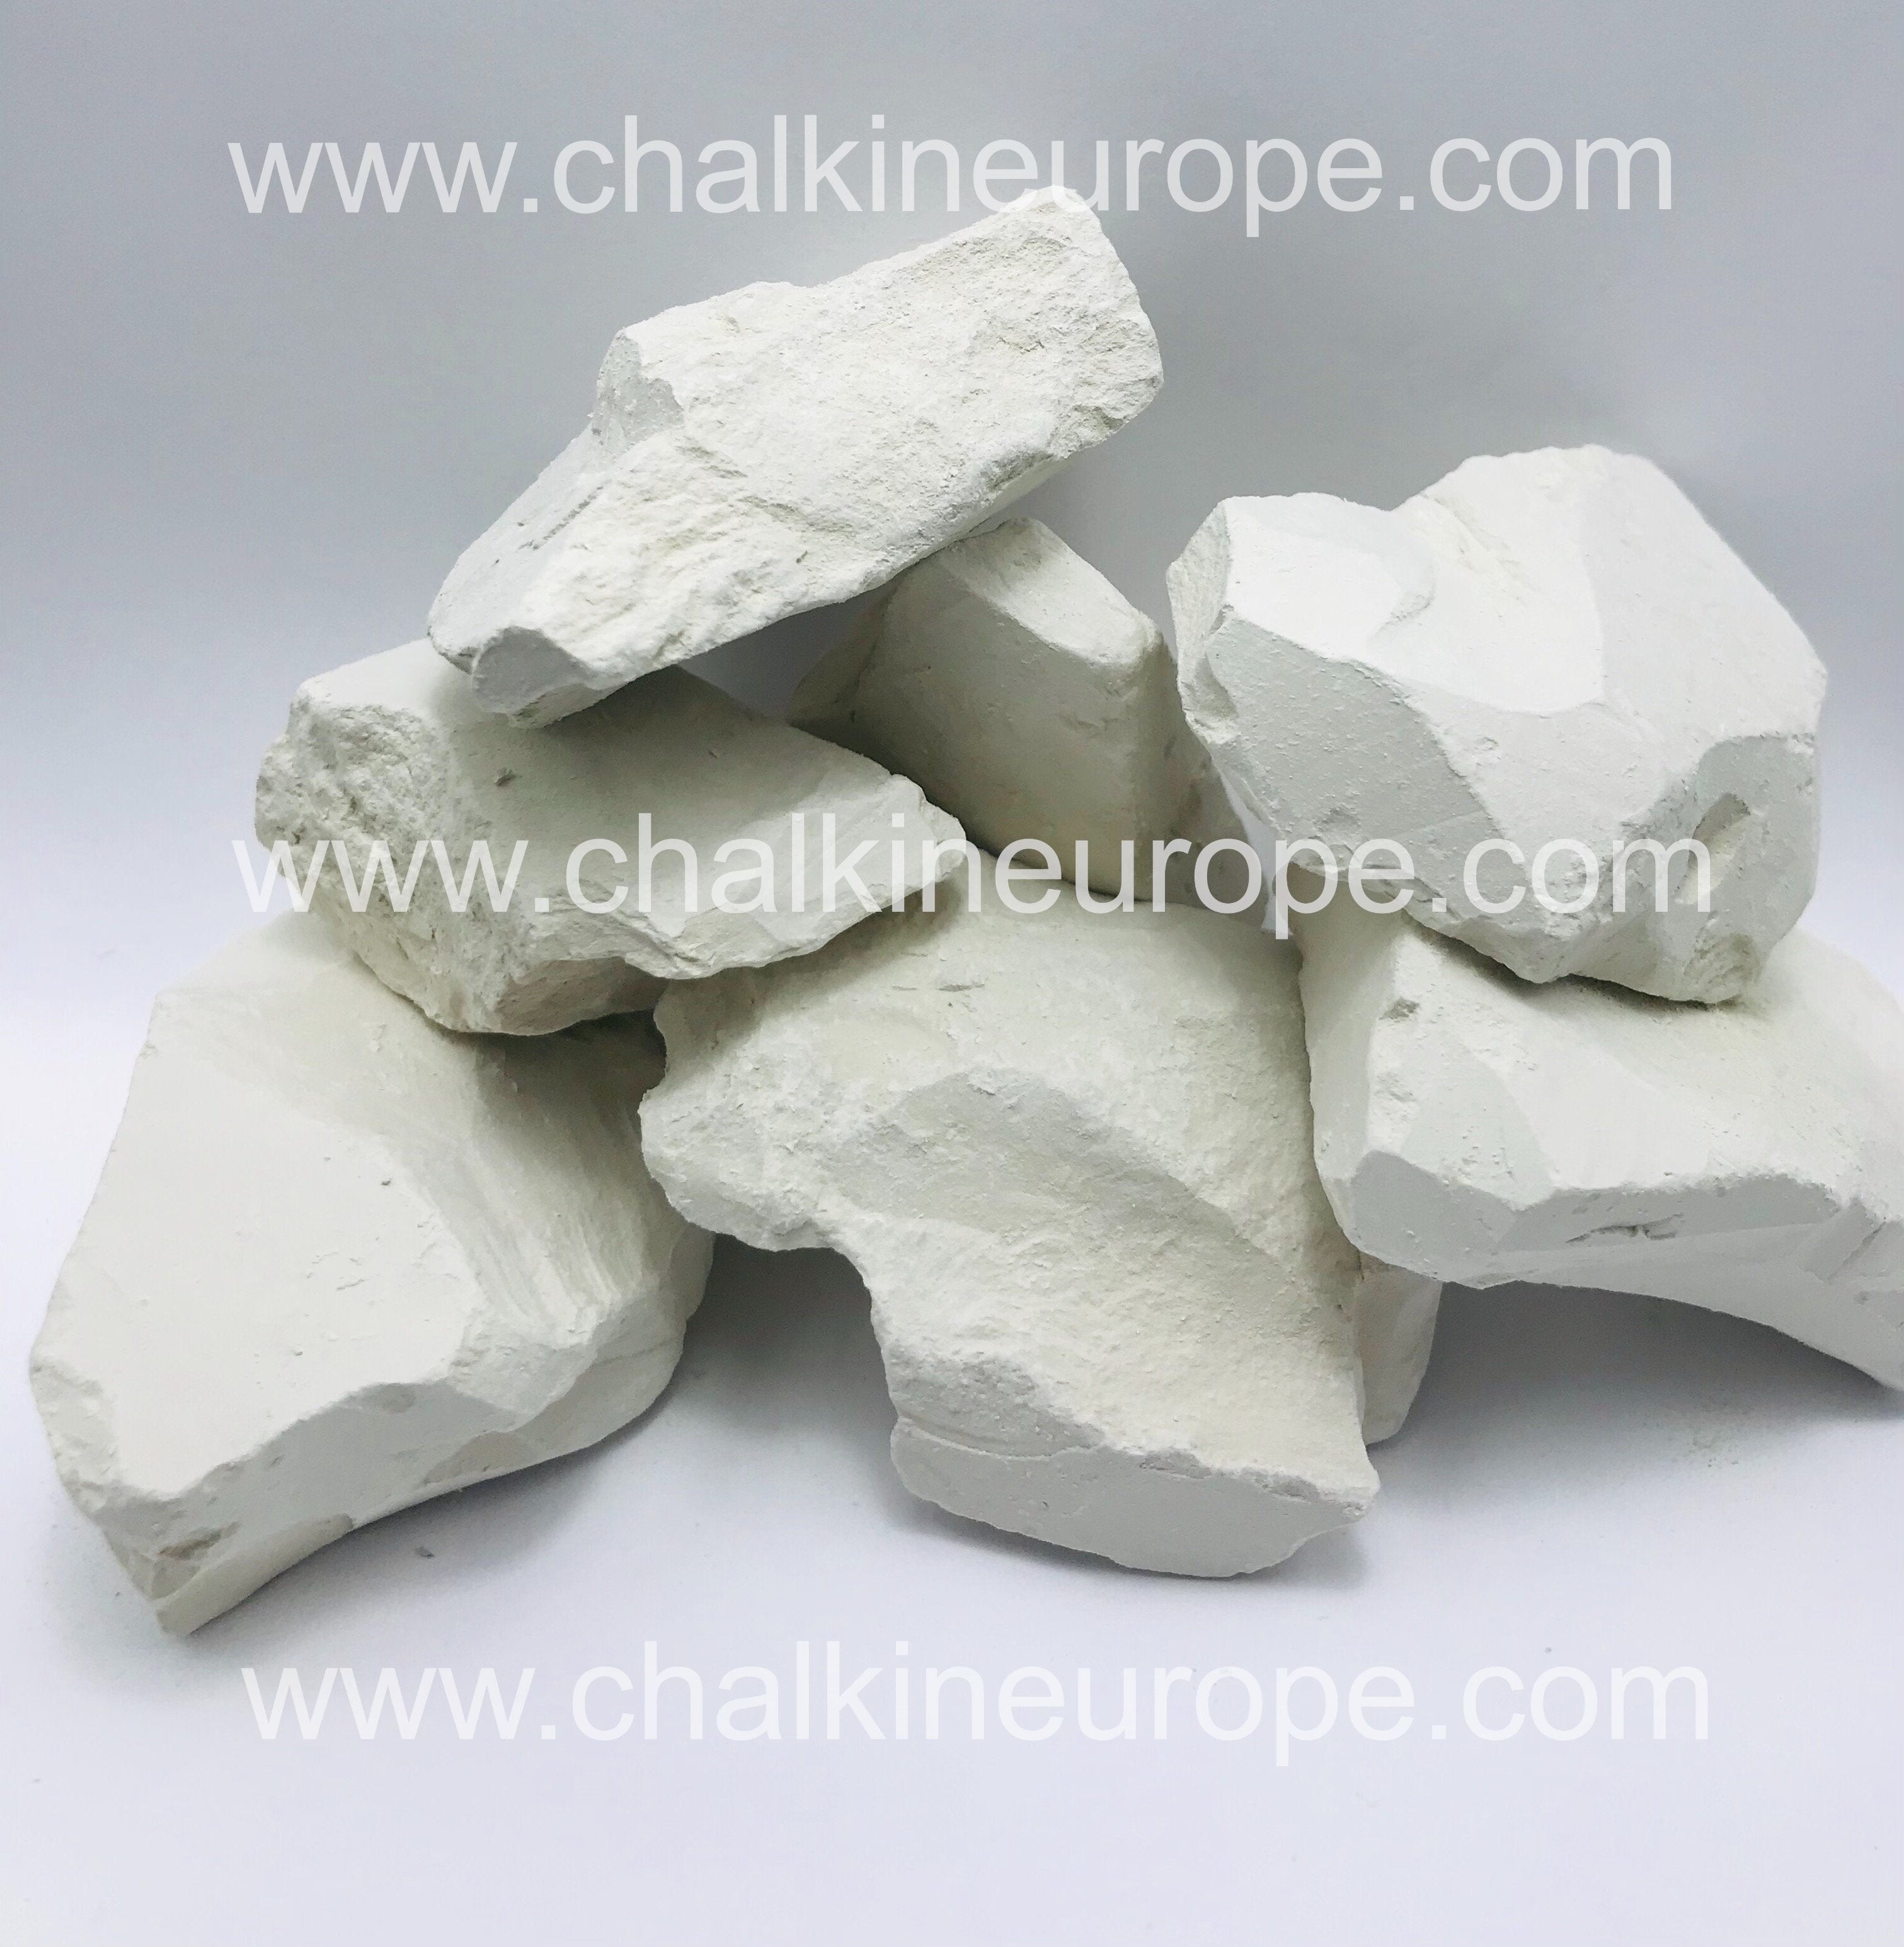 Argile blanche comestible - Chalkineurope